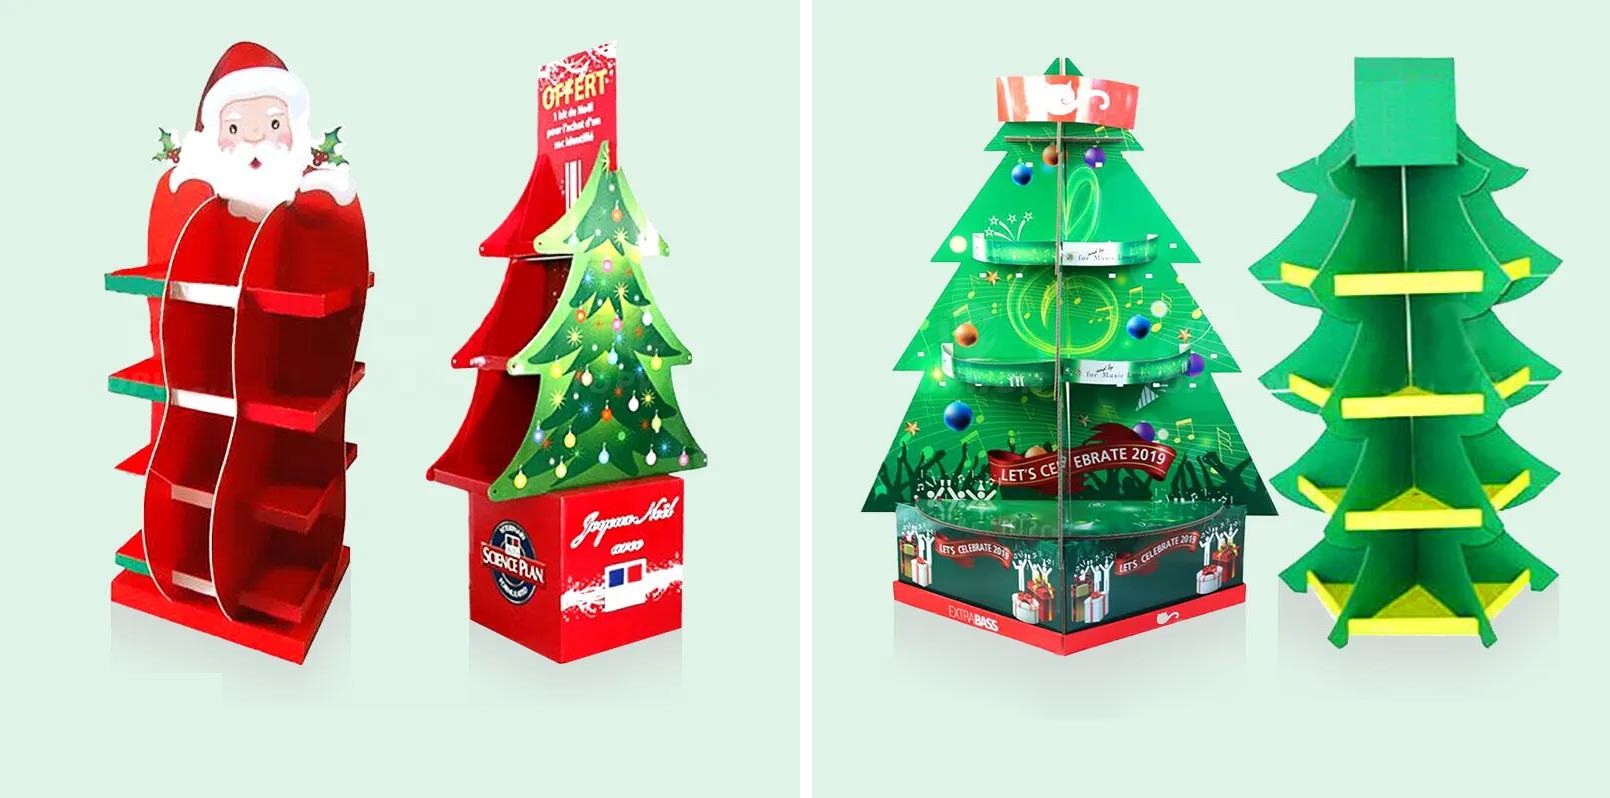 Holidaypac Hot Sale Christmas Festival Promotional Product Display Rack Cardboard Floor Display Stand Gift Christmas Tree Display Stand